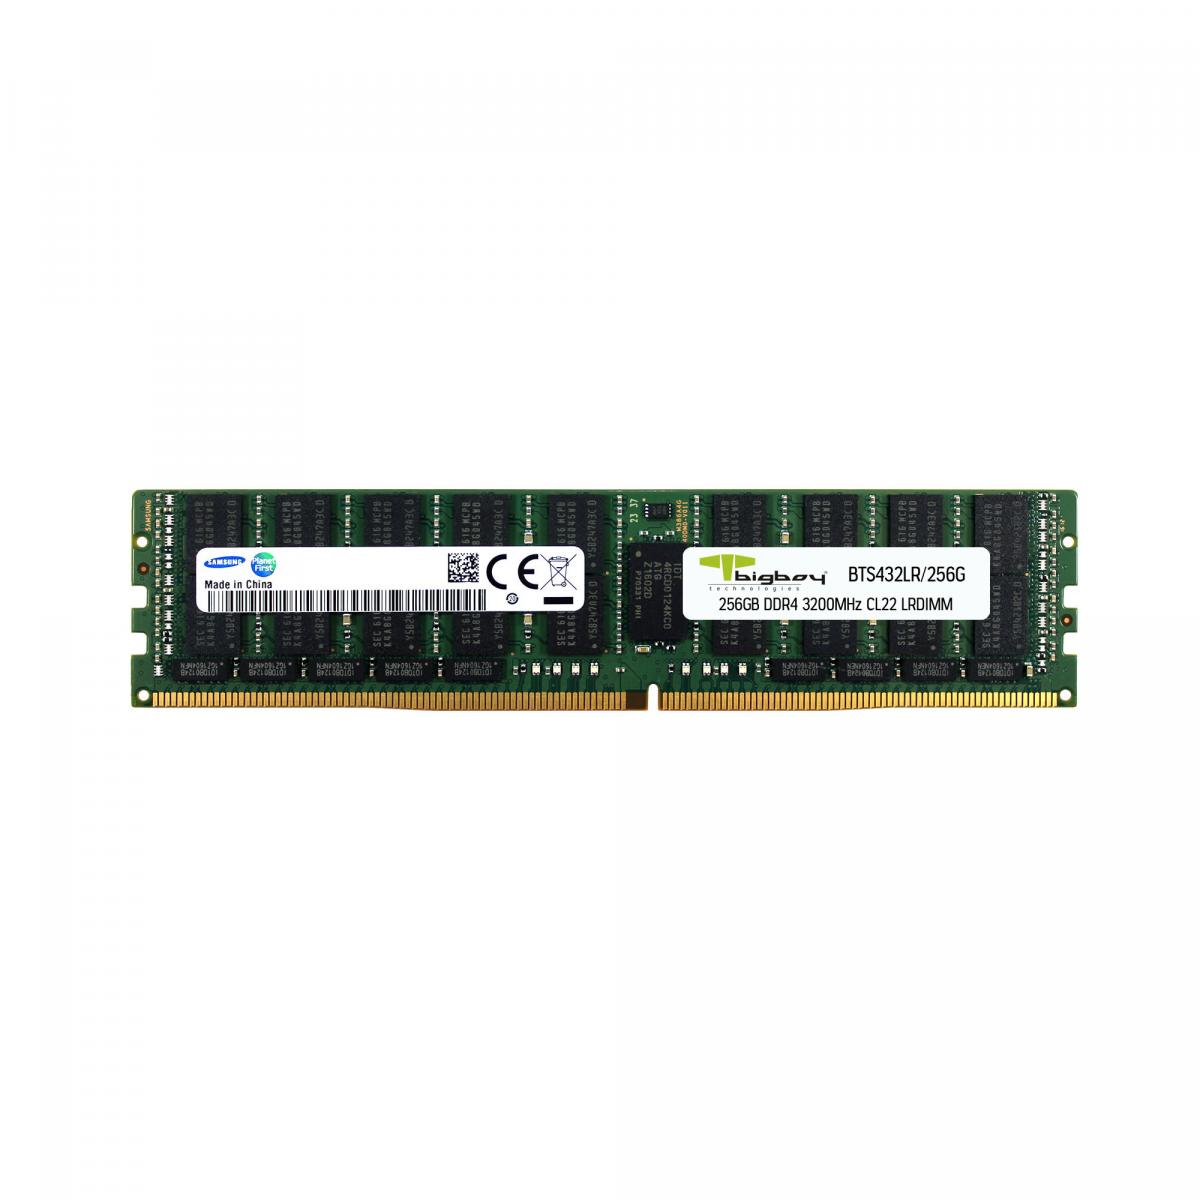 Bigboy 256GB DDR4 3200MHz CL22 LRDIMM Server Rami BTS432LR/256G